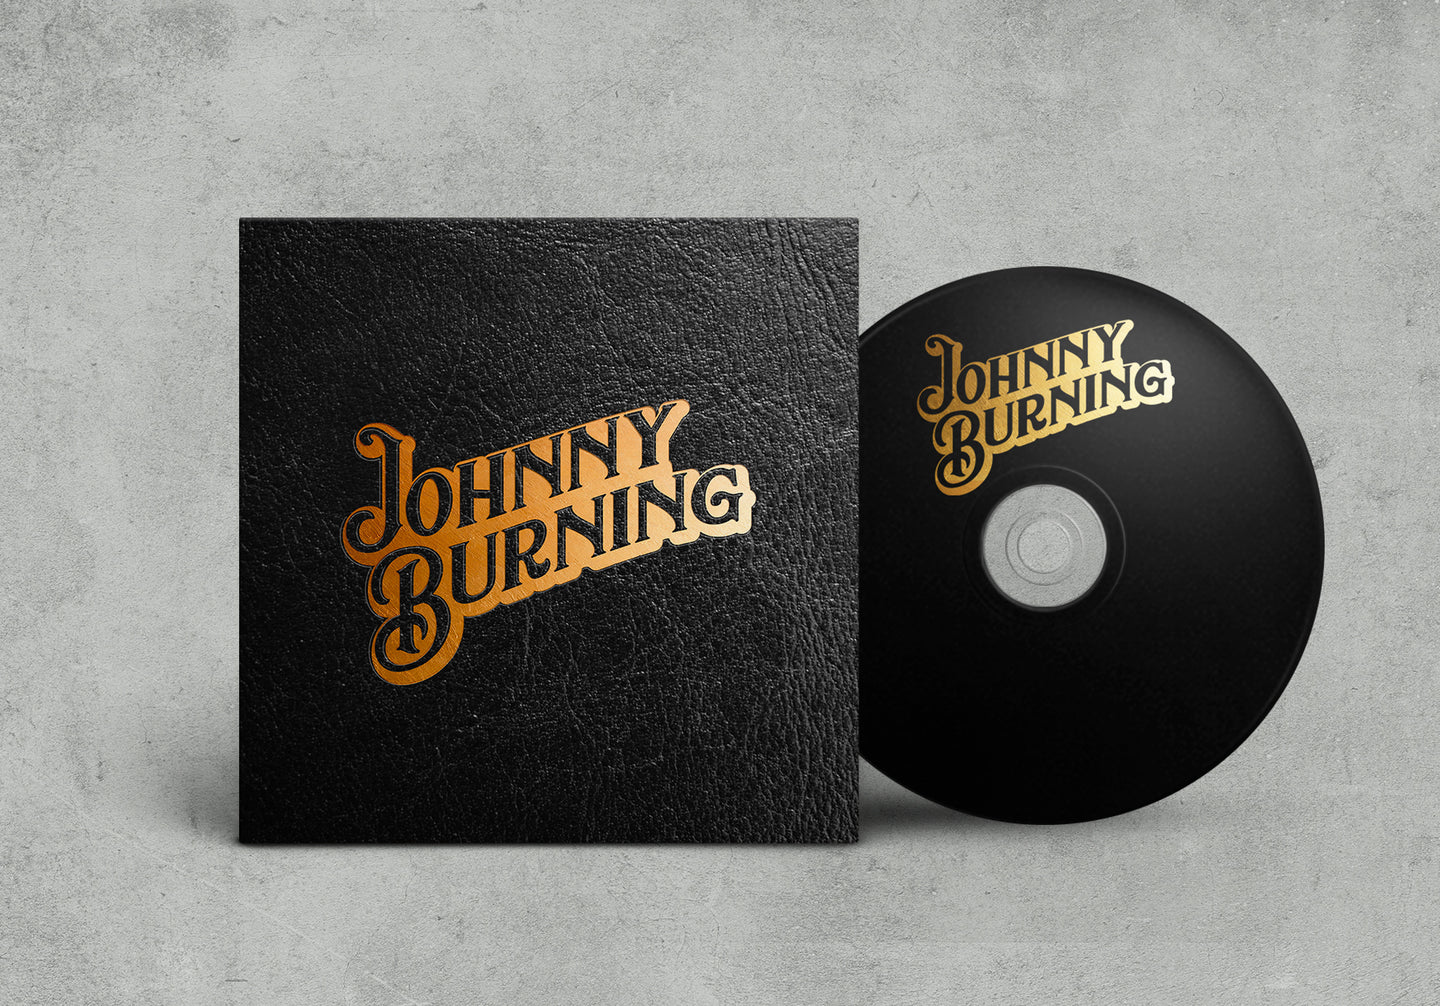 HAGÁMOSLO - CD - JOHNNY BURNING